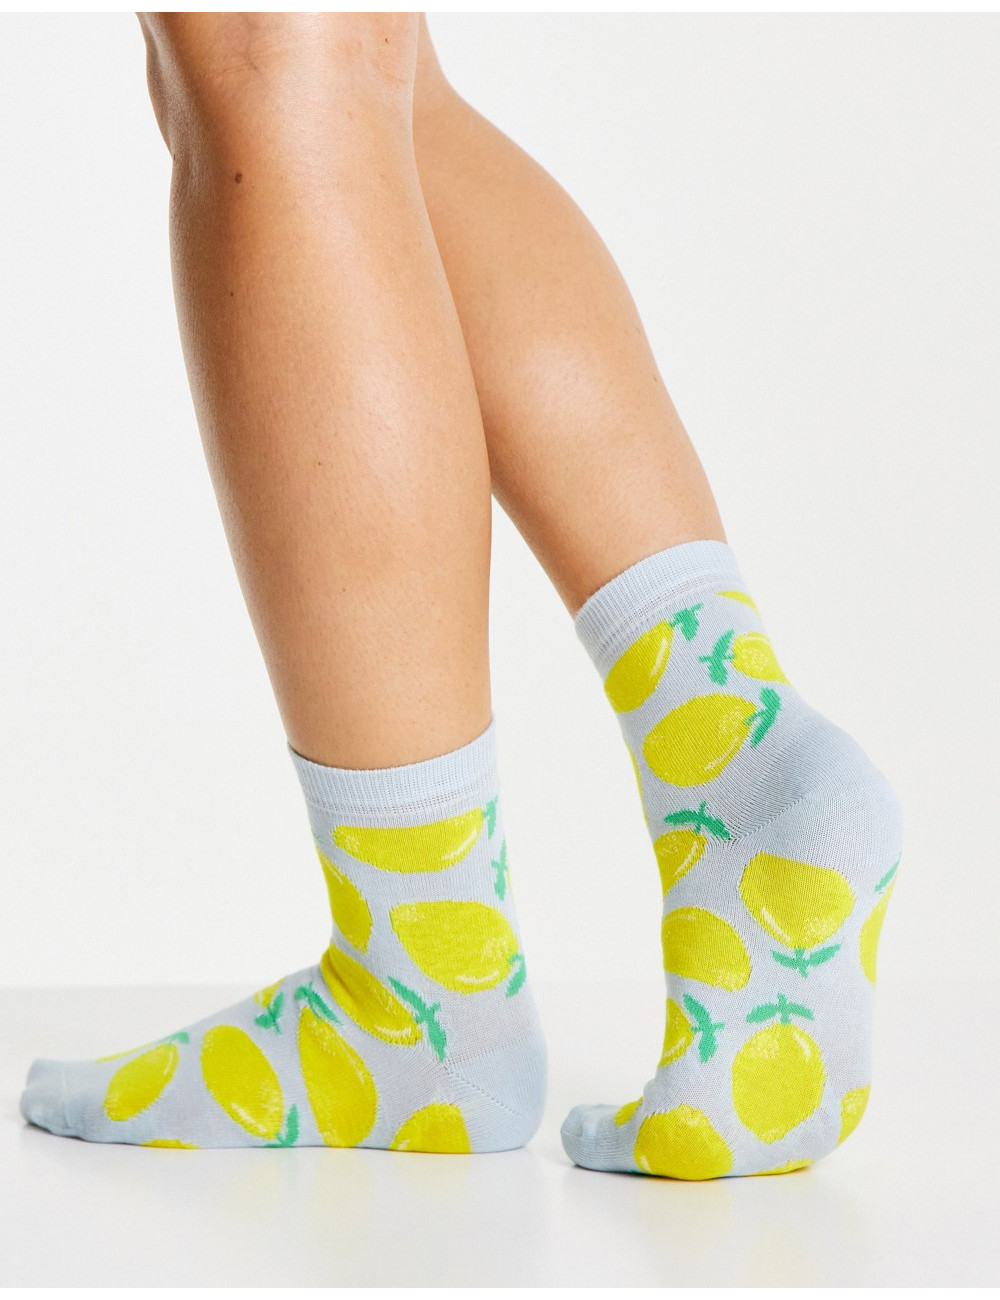 Accessorize socks in lemon...